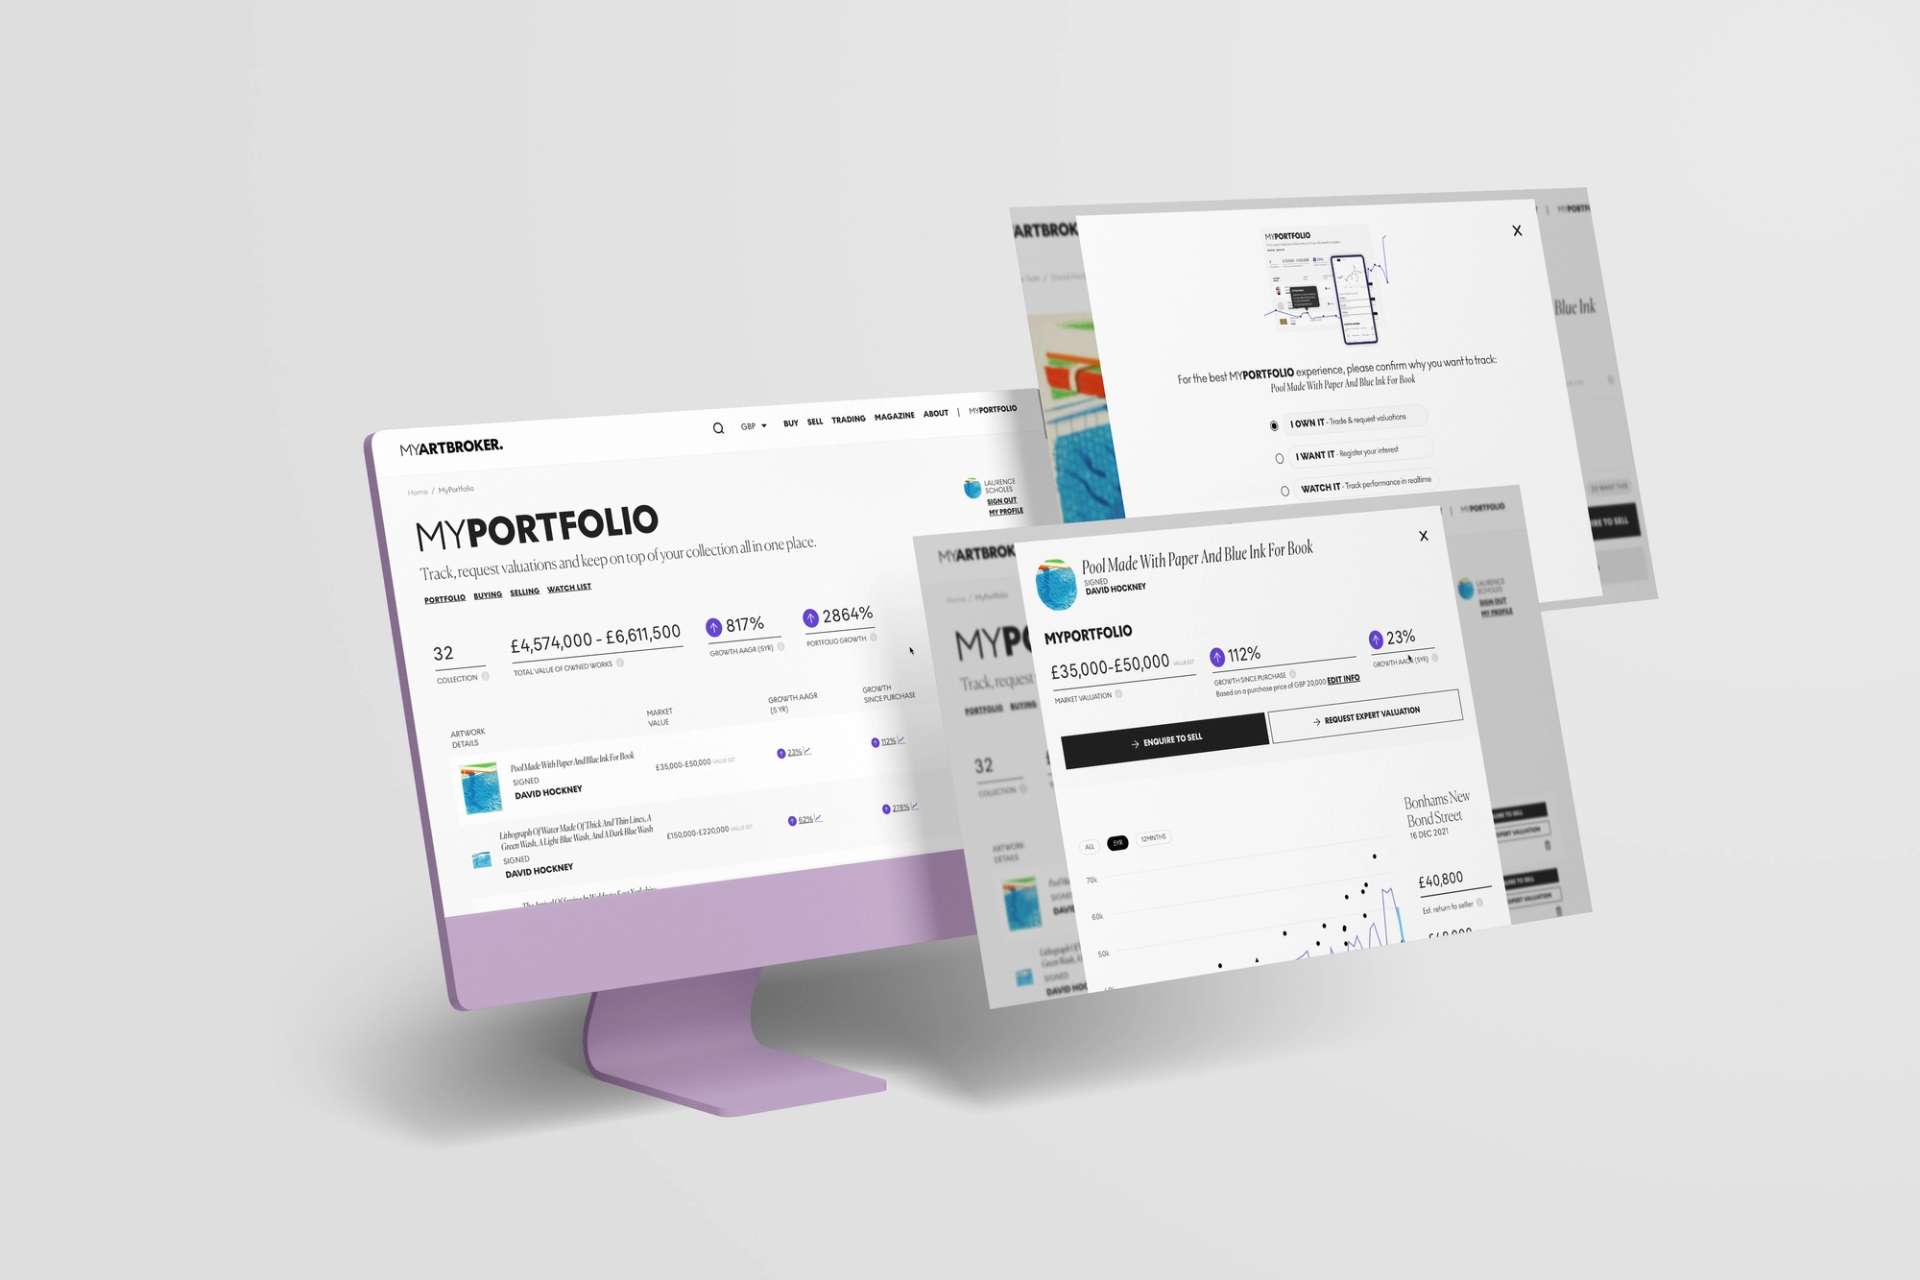 A graphic of computer screens showing MyArtBroker's MyPortfolio dashboard